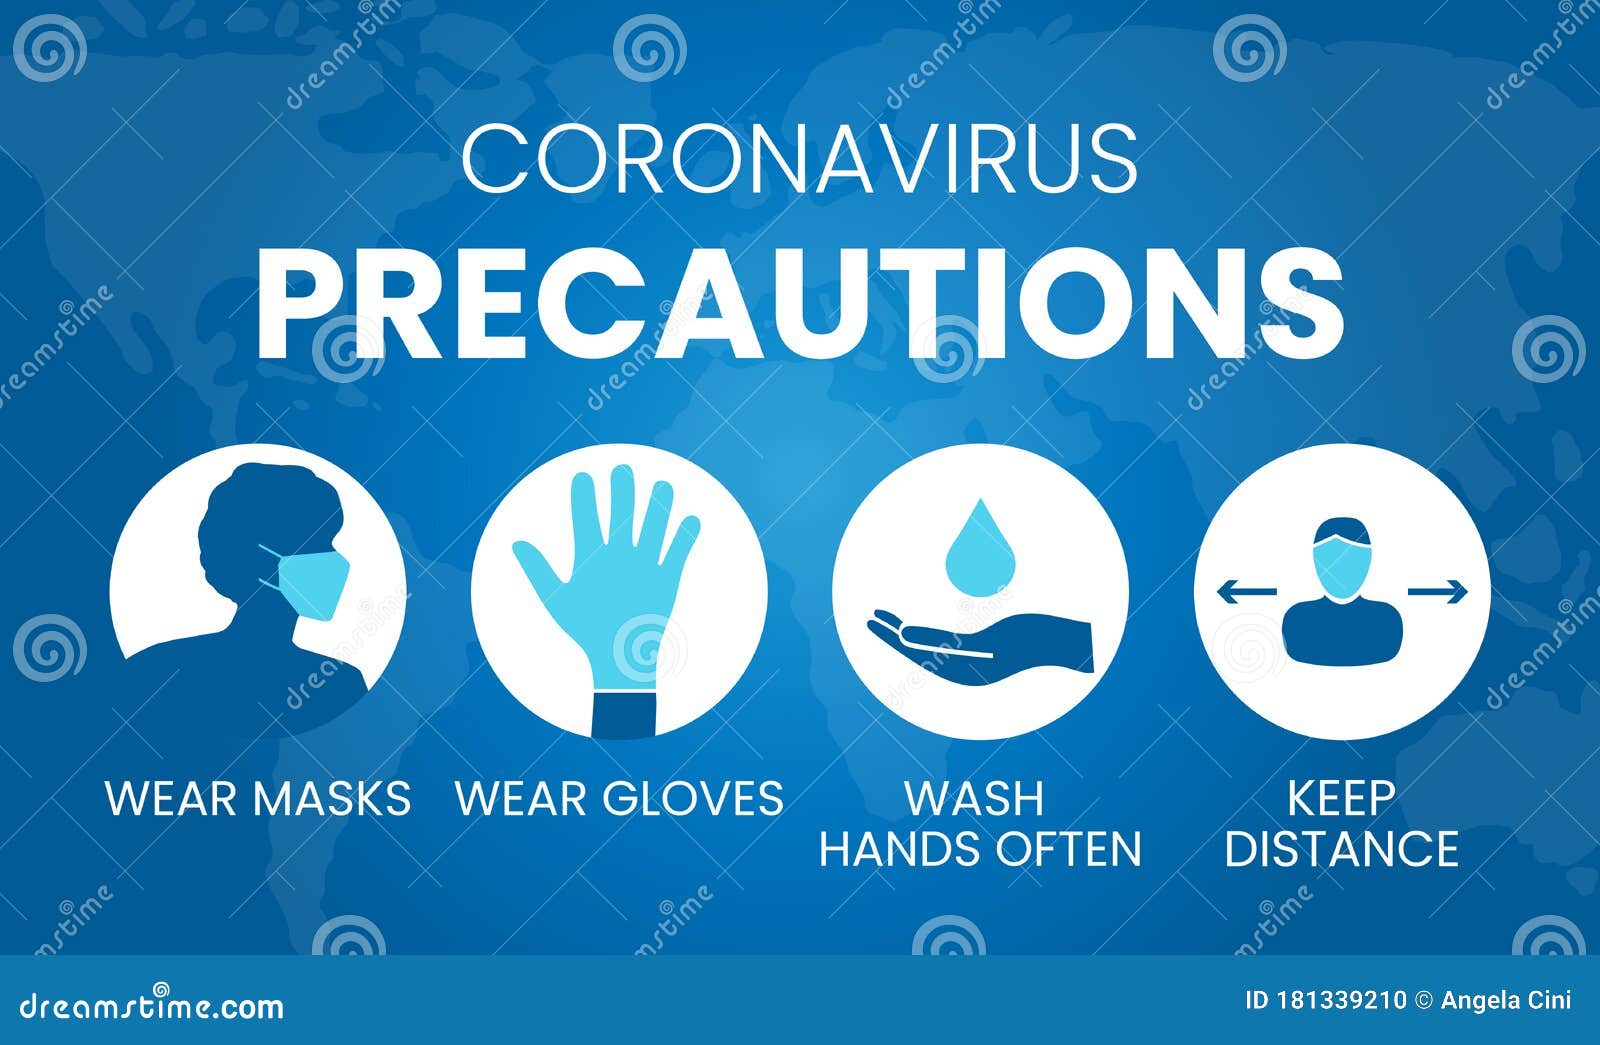 coronavirus precautions   with wear masks, gloves, wash hands, keep distance icons